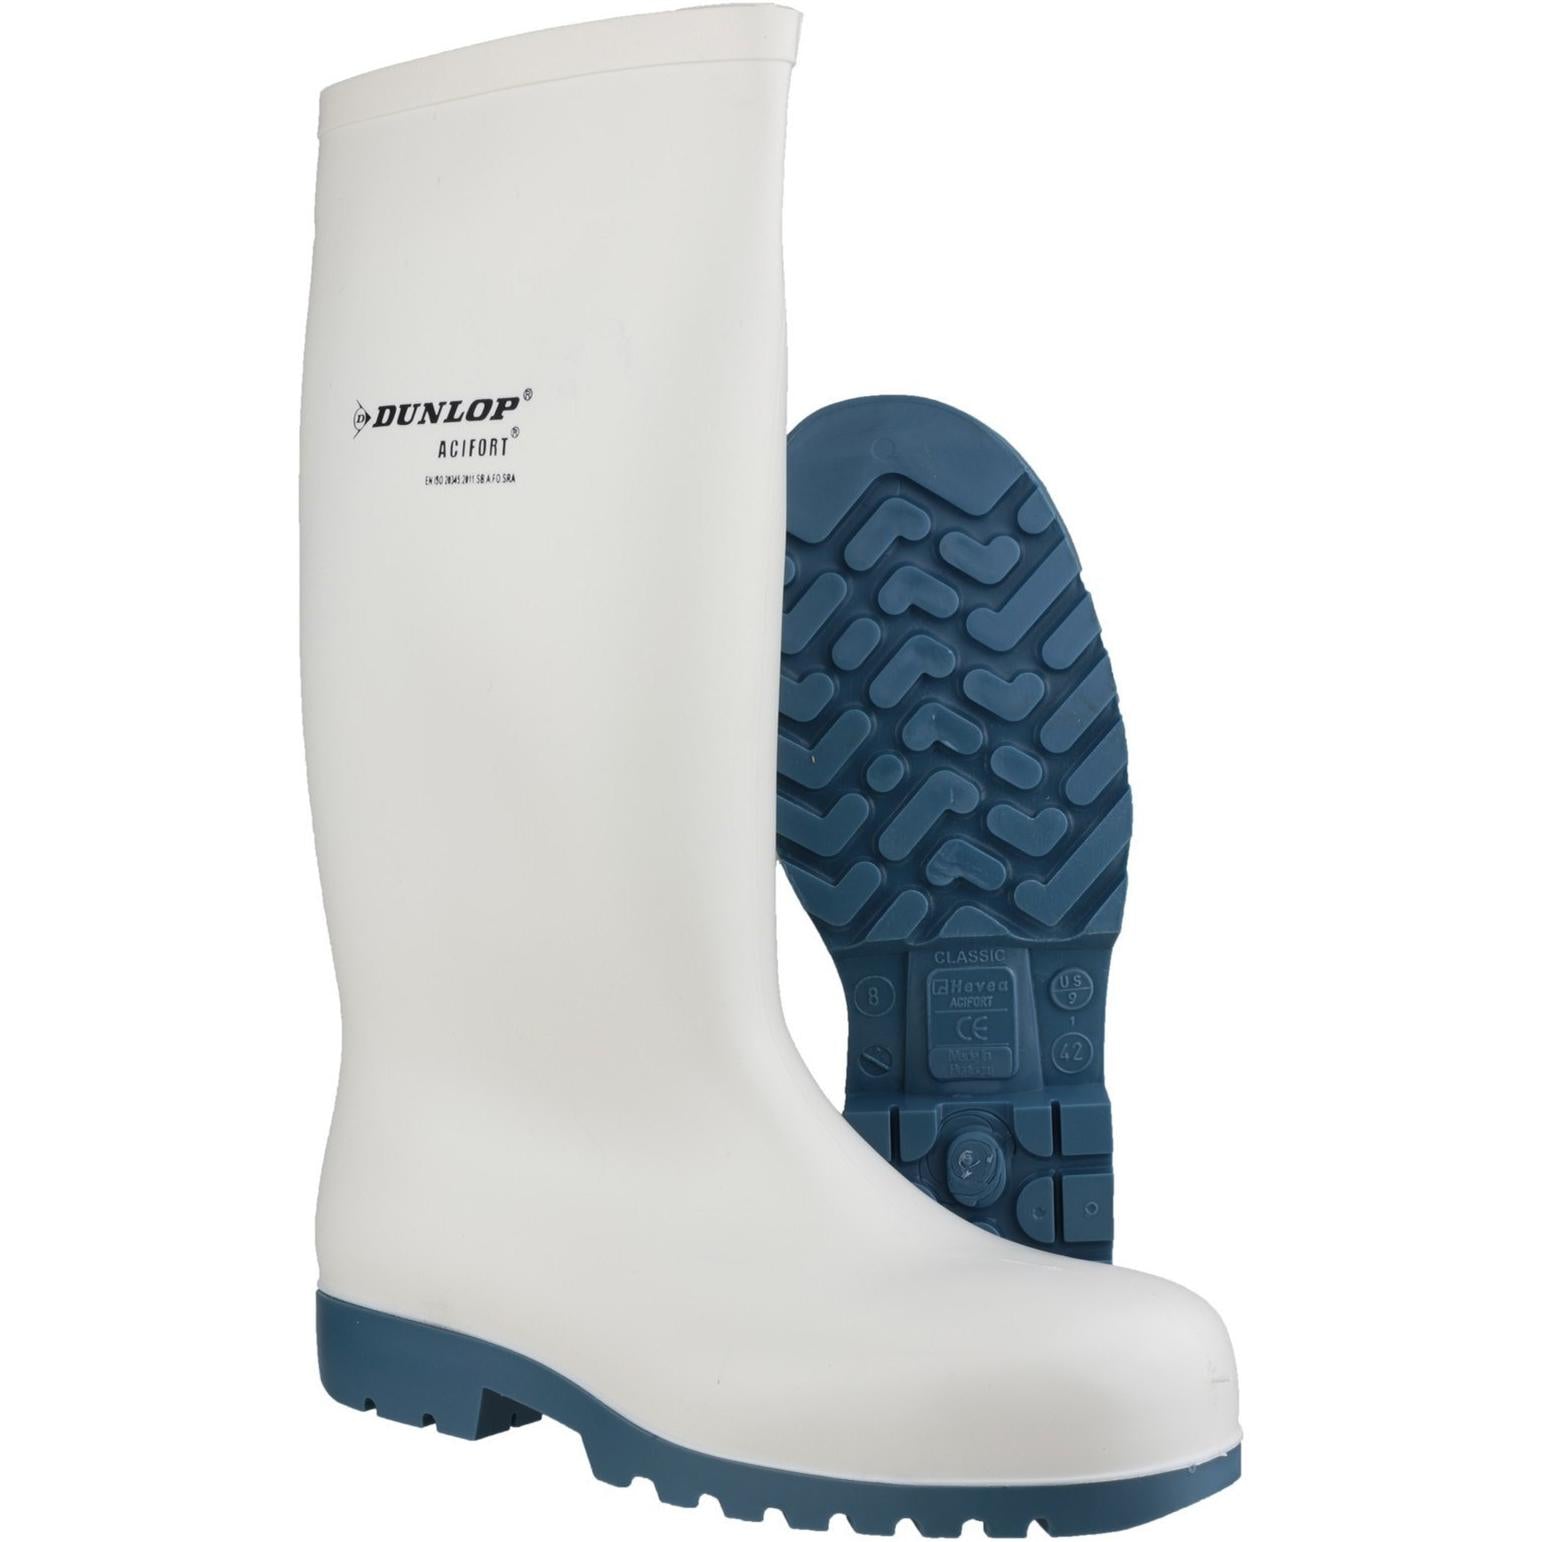 Dunlop A681331 HEVEA Acifort Classic Safety Wellington Boots